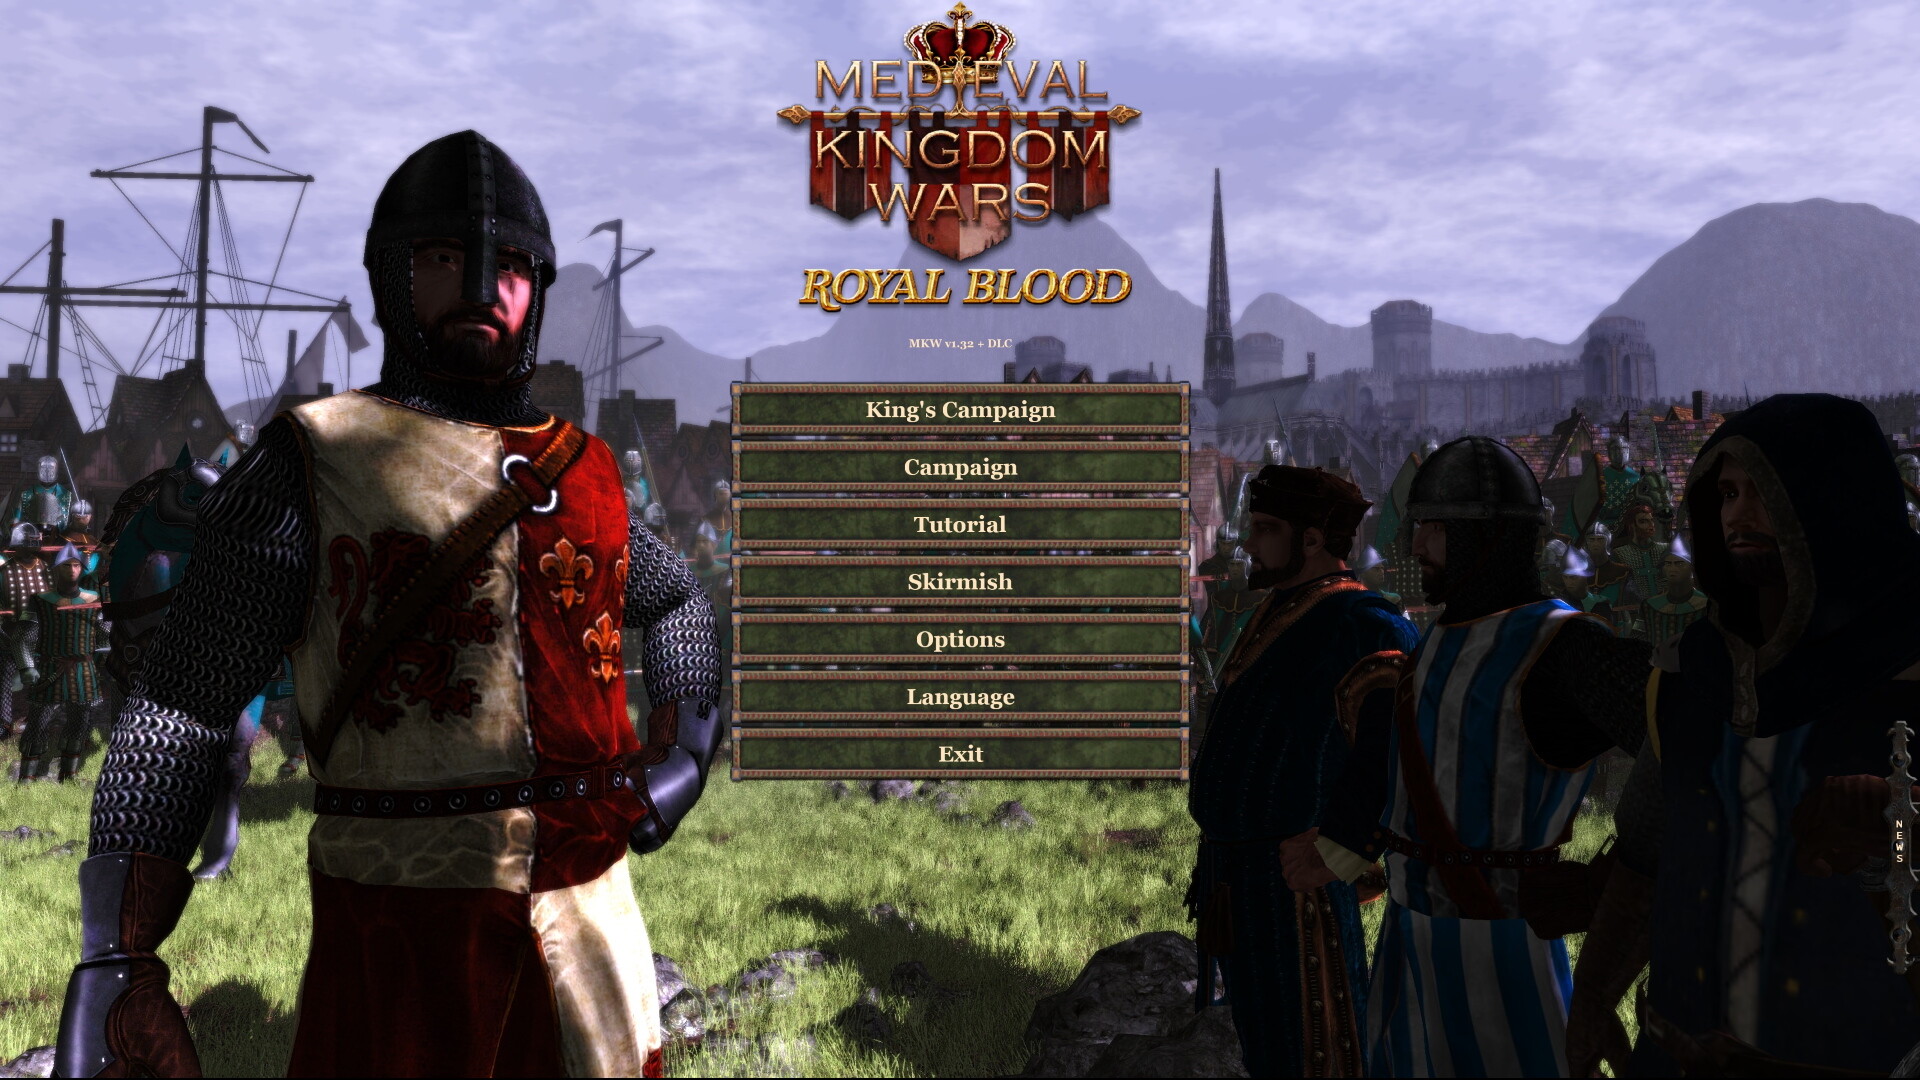 [$ 0.4] Medieval Kingdom Wars - Royal Blood DLC Steam CD Key